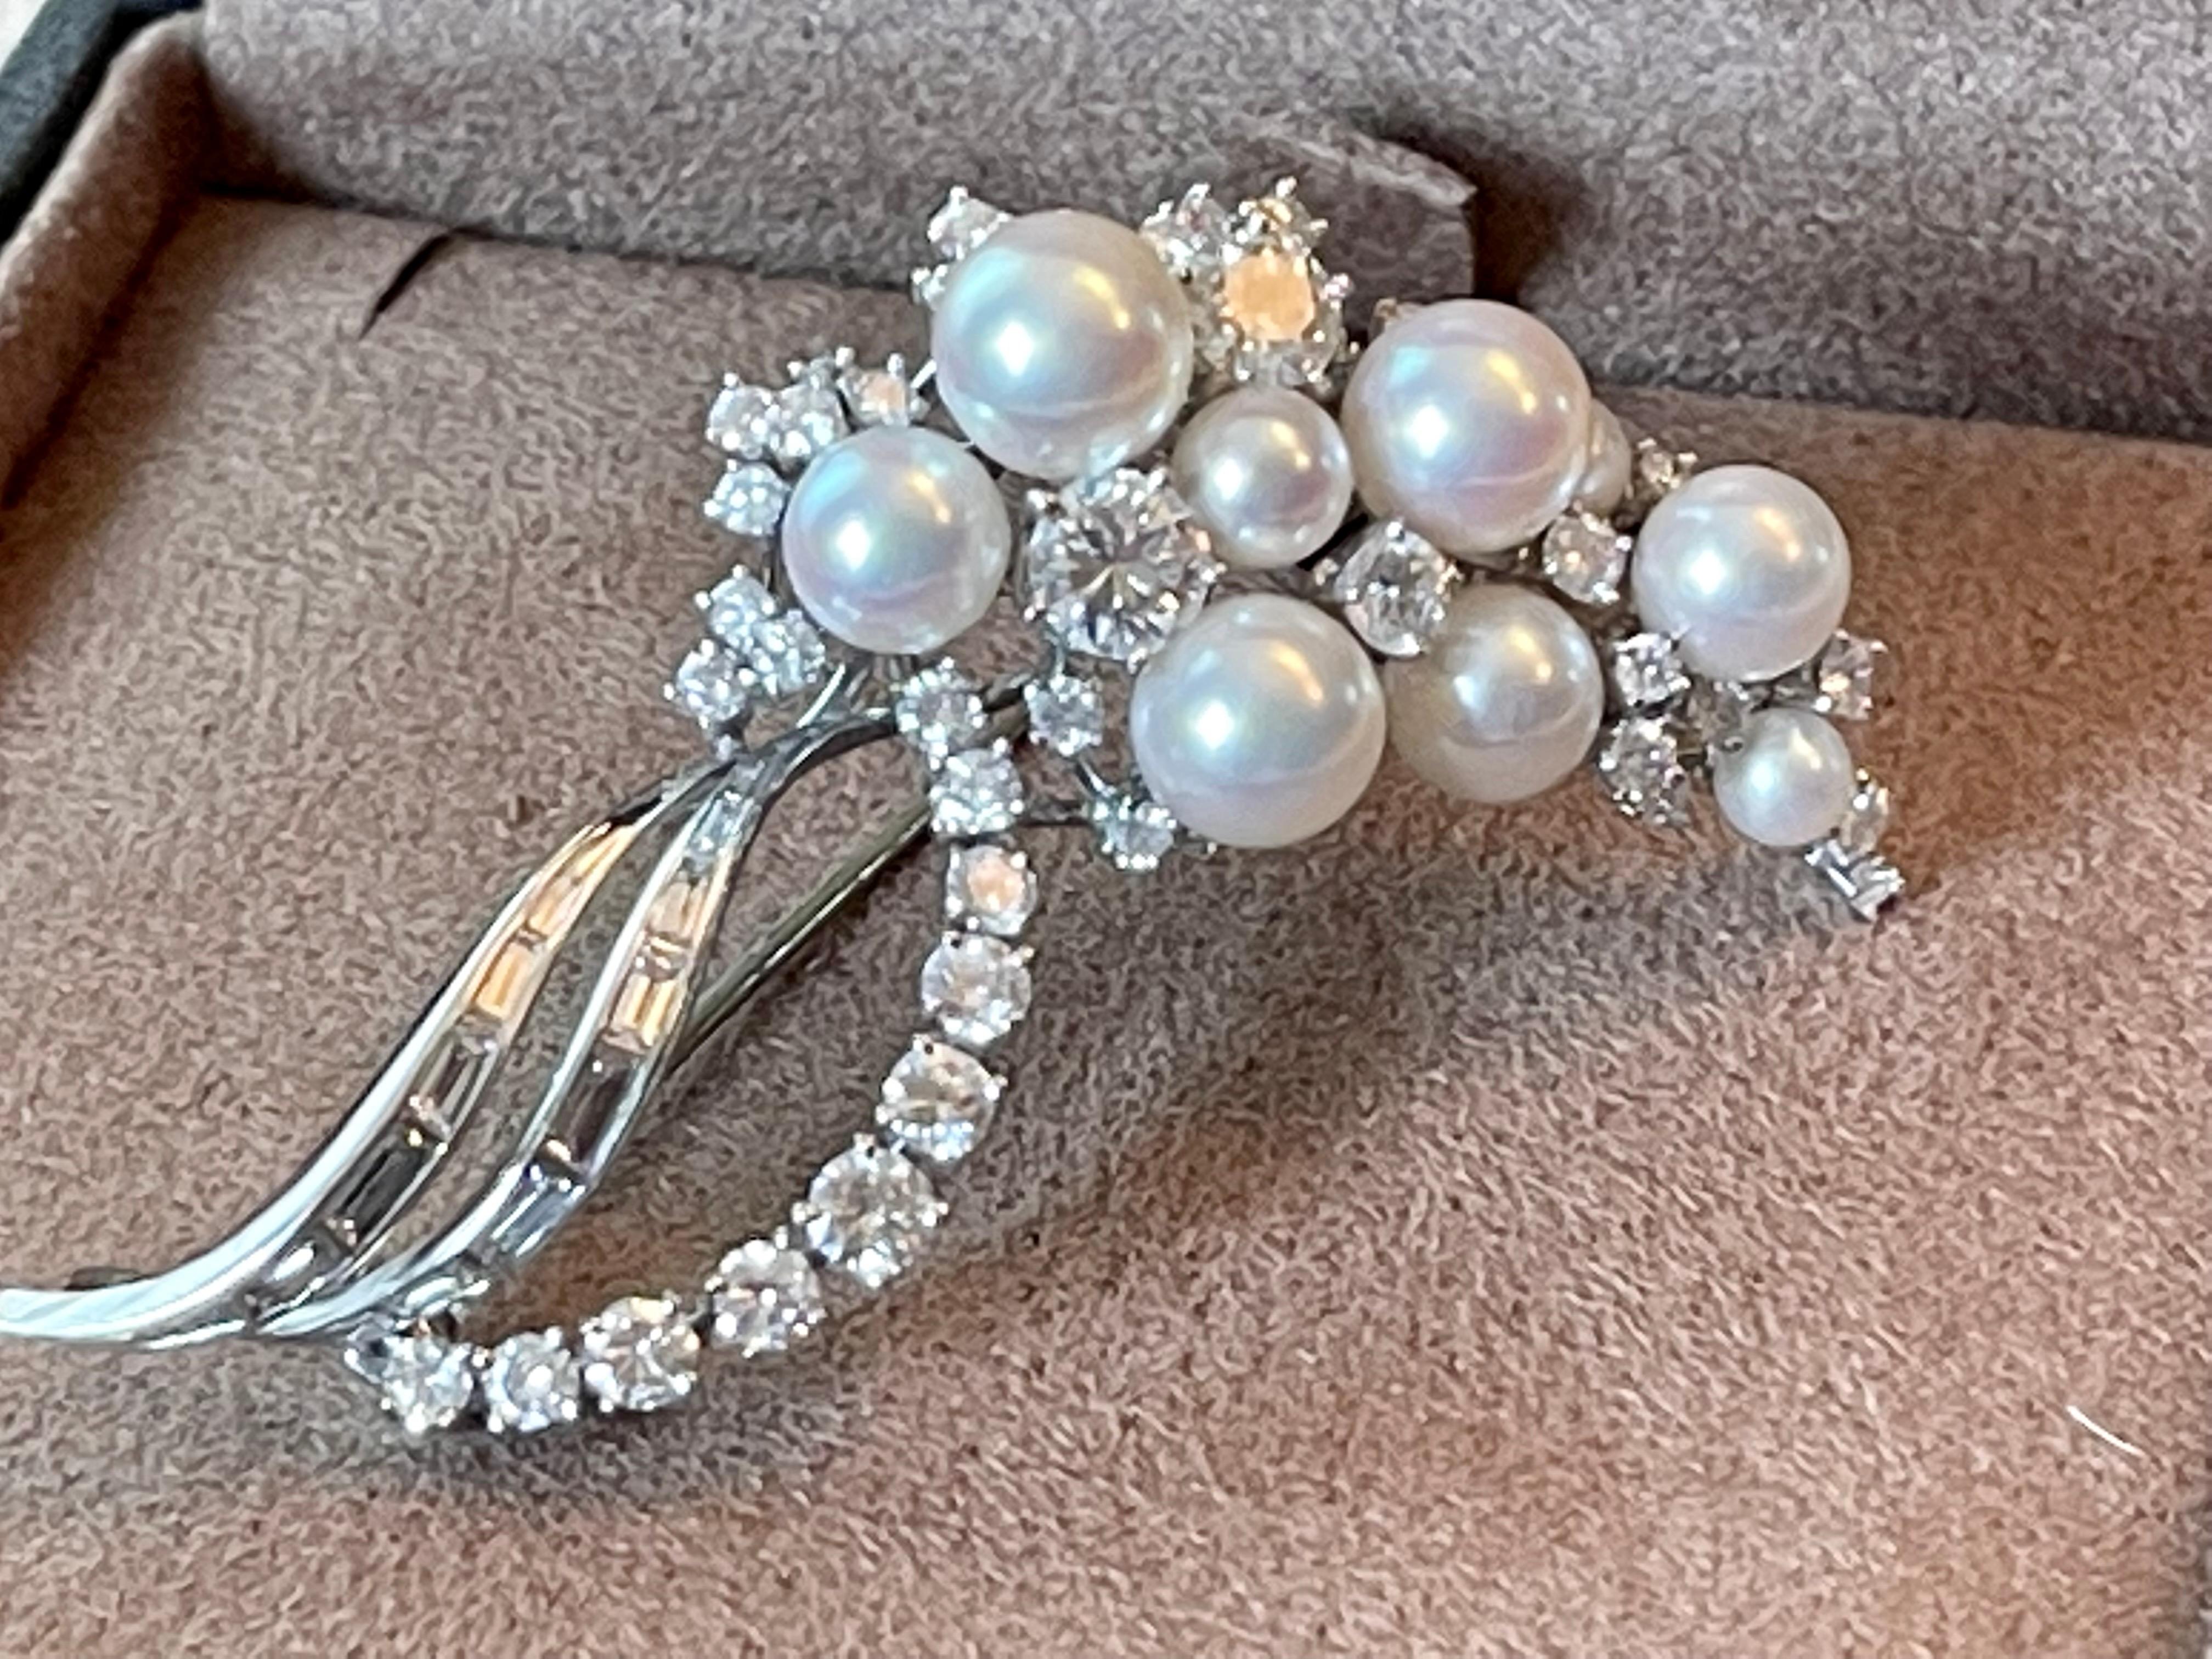 Brilliant Cut Elegant 18 K White Gold Brooch Diamond Akoya Pearls circa 1970 by Meister Zurich For Sale